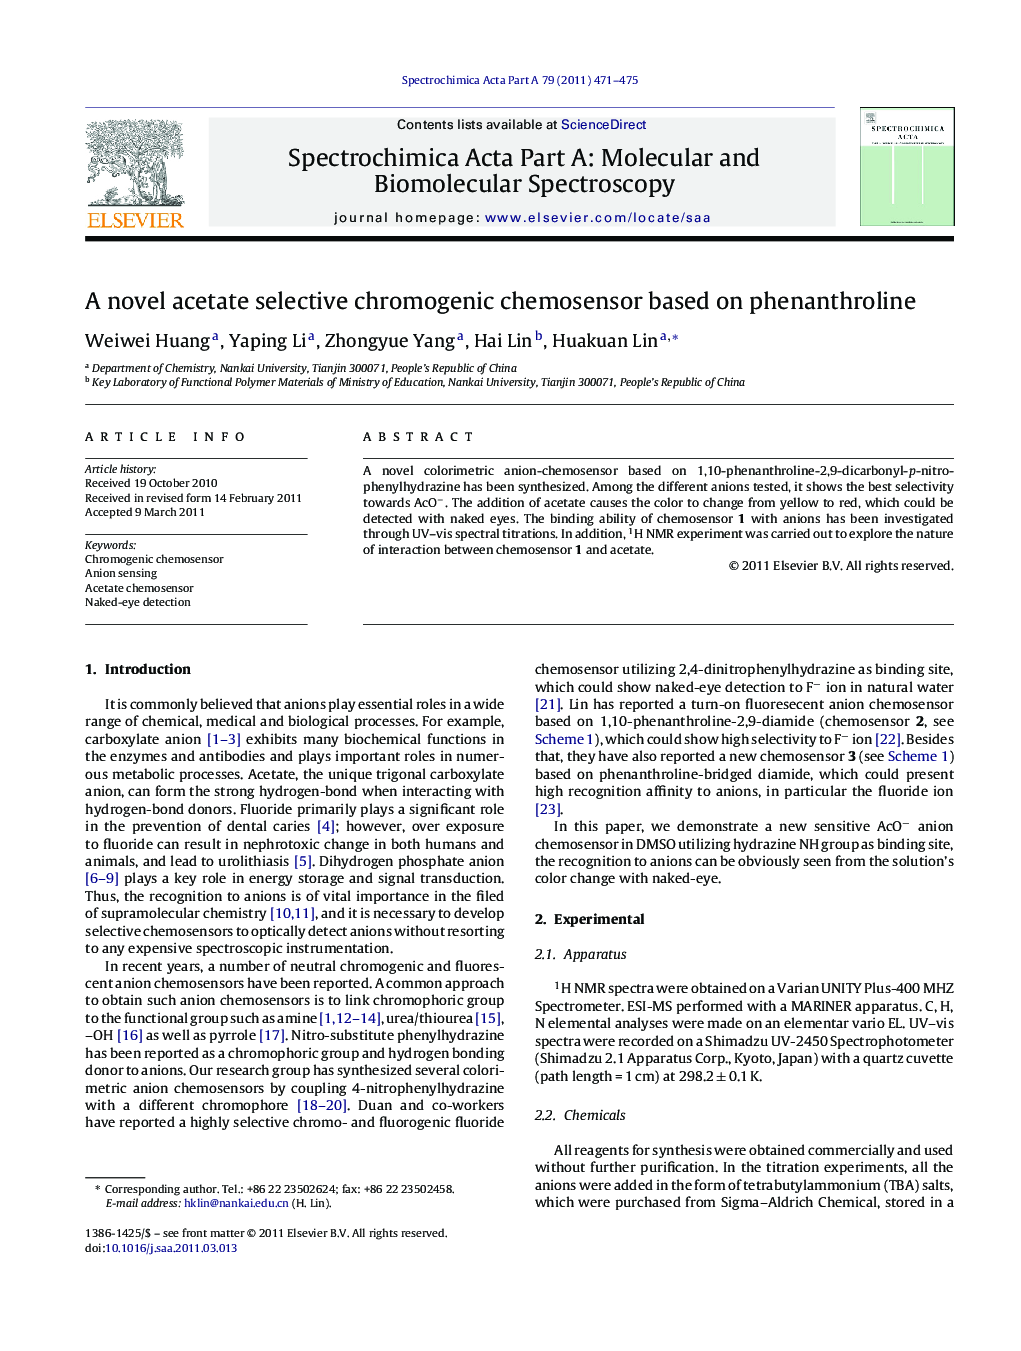 A novel acetate selective chromogenic chemosensor based on phenanthroline